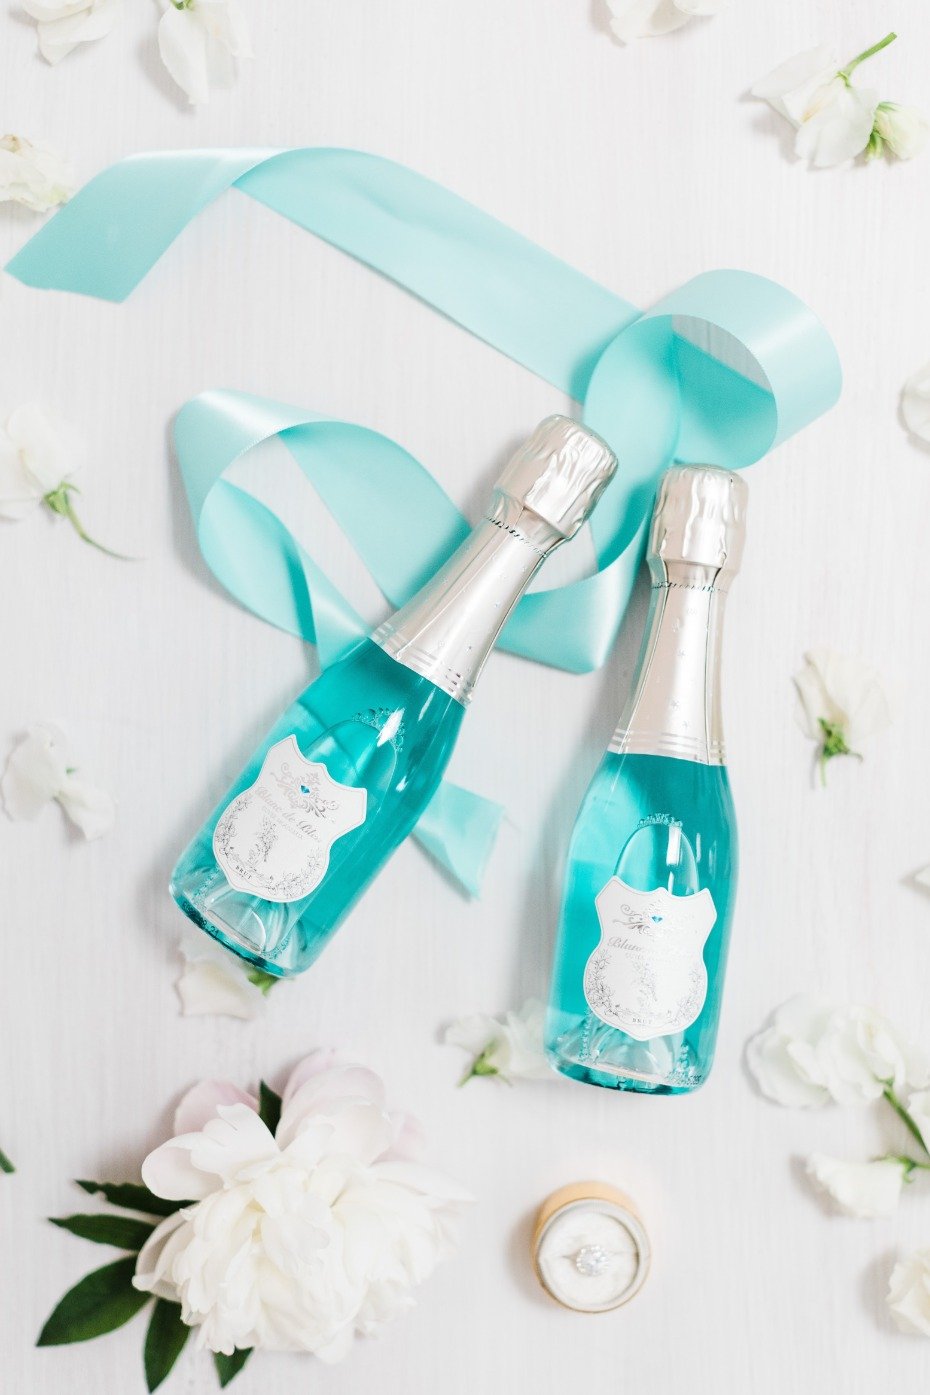 Blanc de Bleu Breakfast at Tiffany's Bridal Shower Mini Bottle Favors